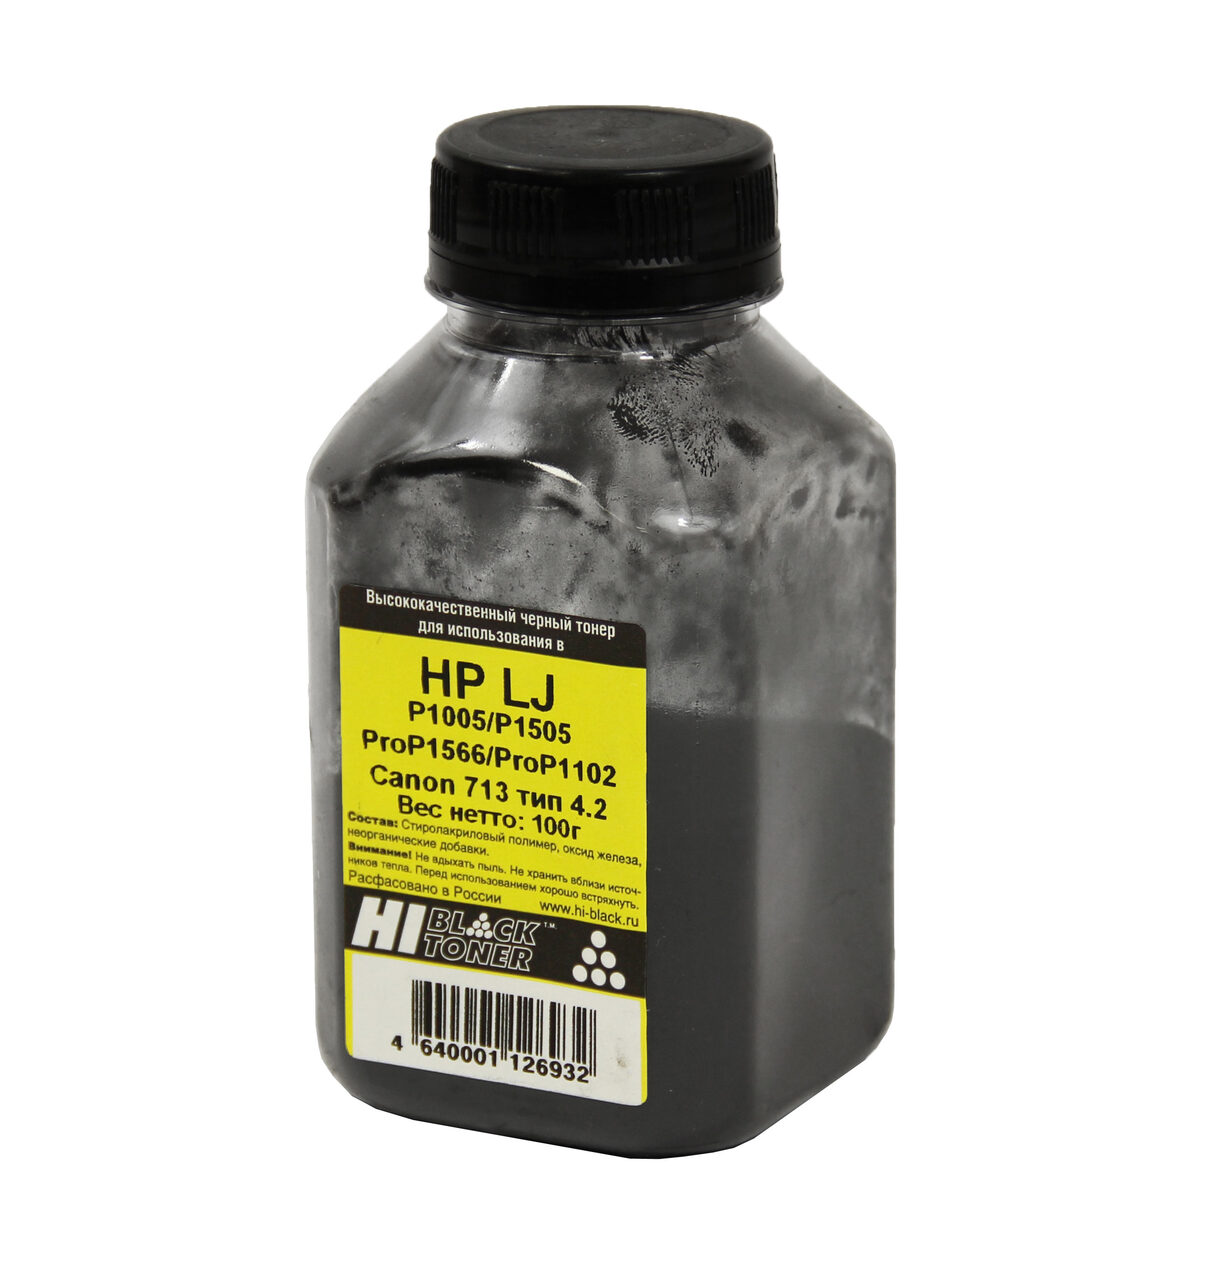 Тонер Hi-Black для HP LJP1005/P1505/ProP1566/ProP1102/Canon713, Тип 4.2, Bk, 100 г,банка